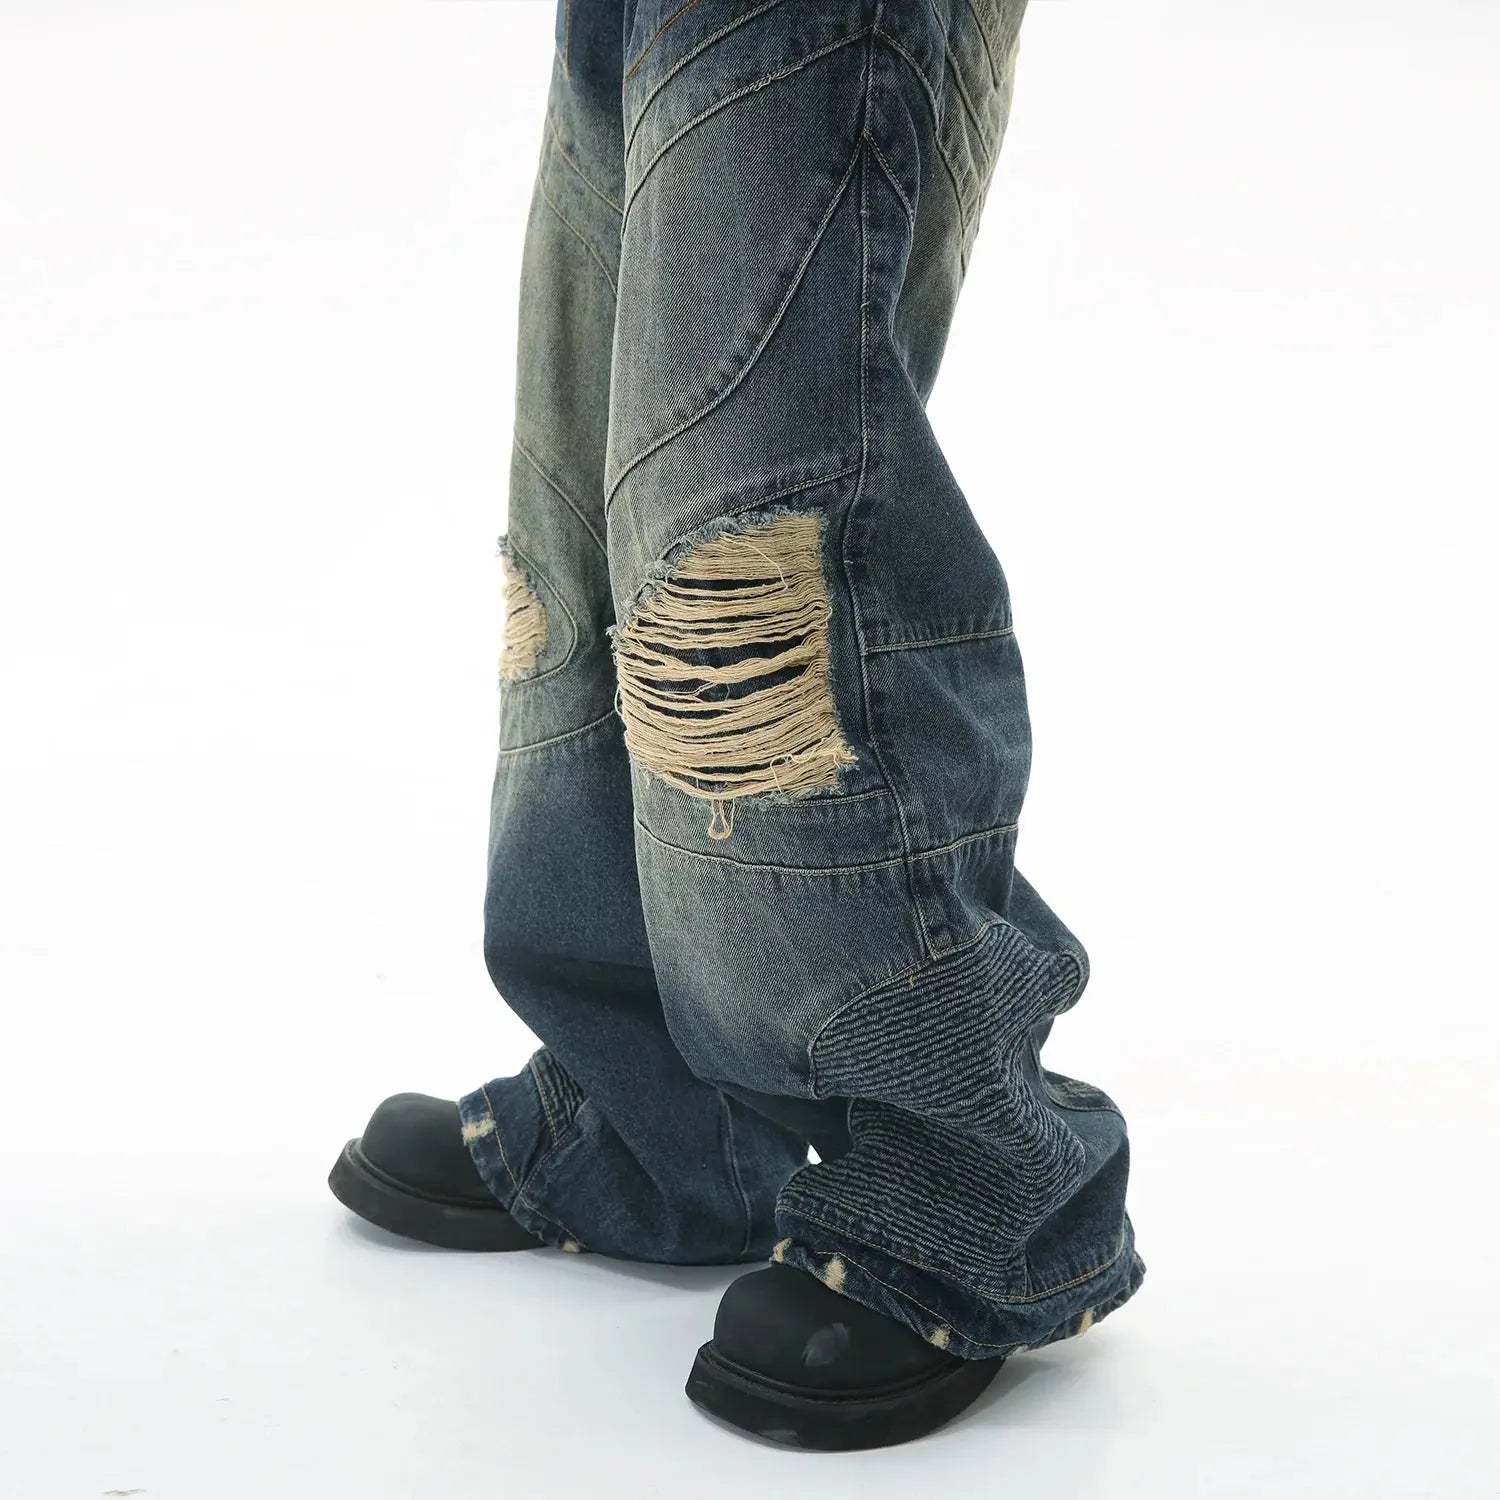 Vintage Men's Jeans High Street Spliced Hole Straight Wide Leg Denim Pants Fashion Distress Blue Loose Trousers Streetwear New Hominus Denim